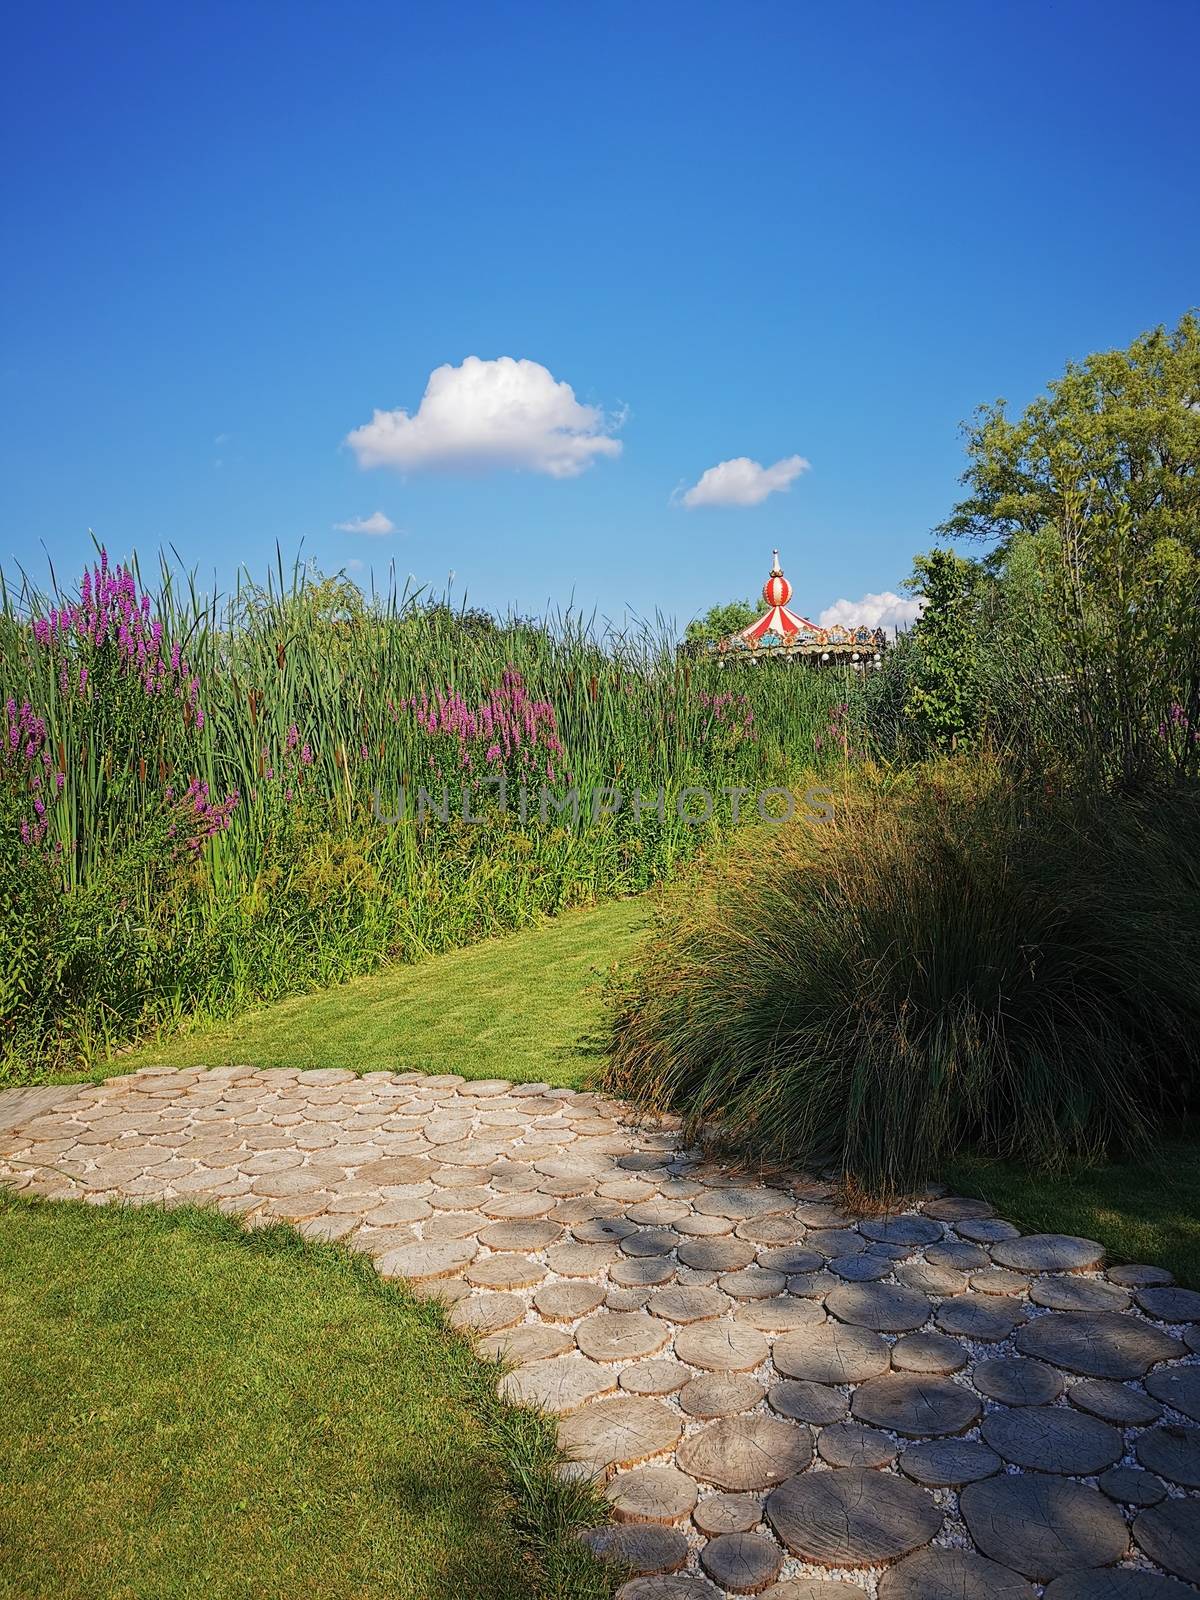 Fairy garden landscape in Miskolc on a summer's day by balage941